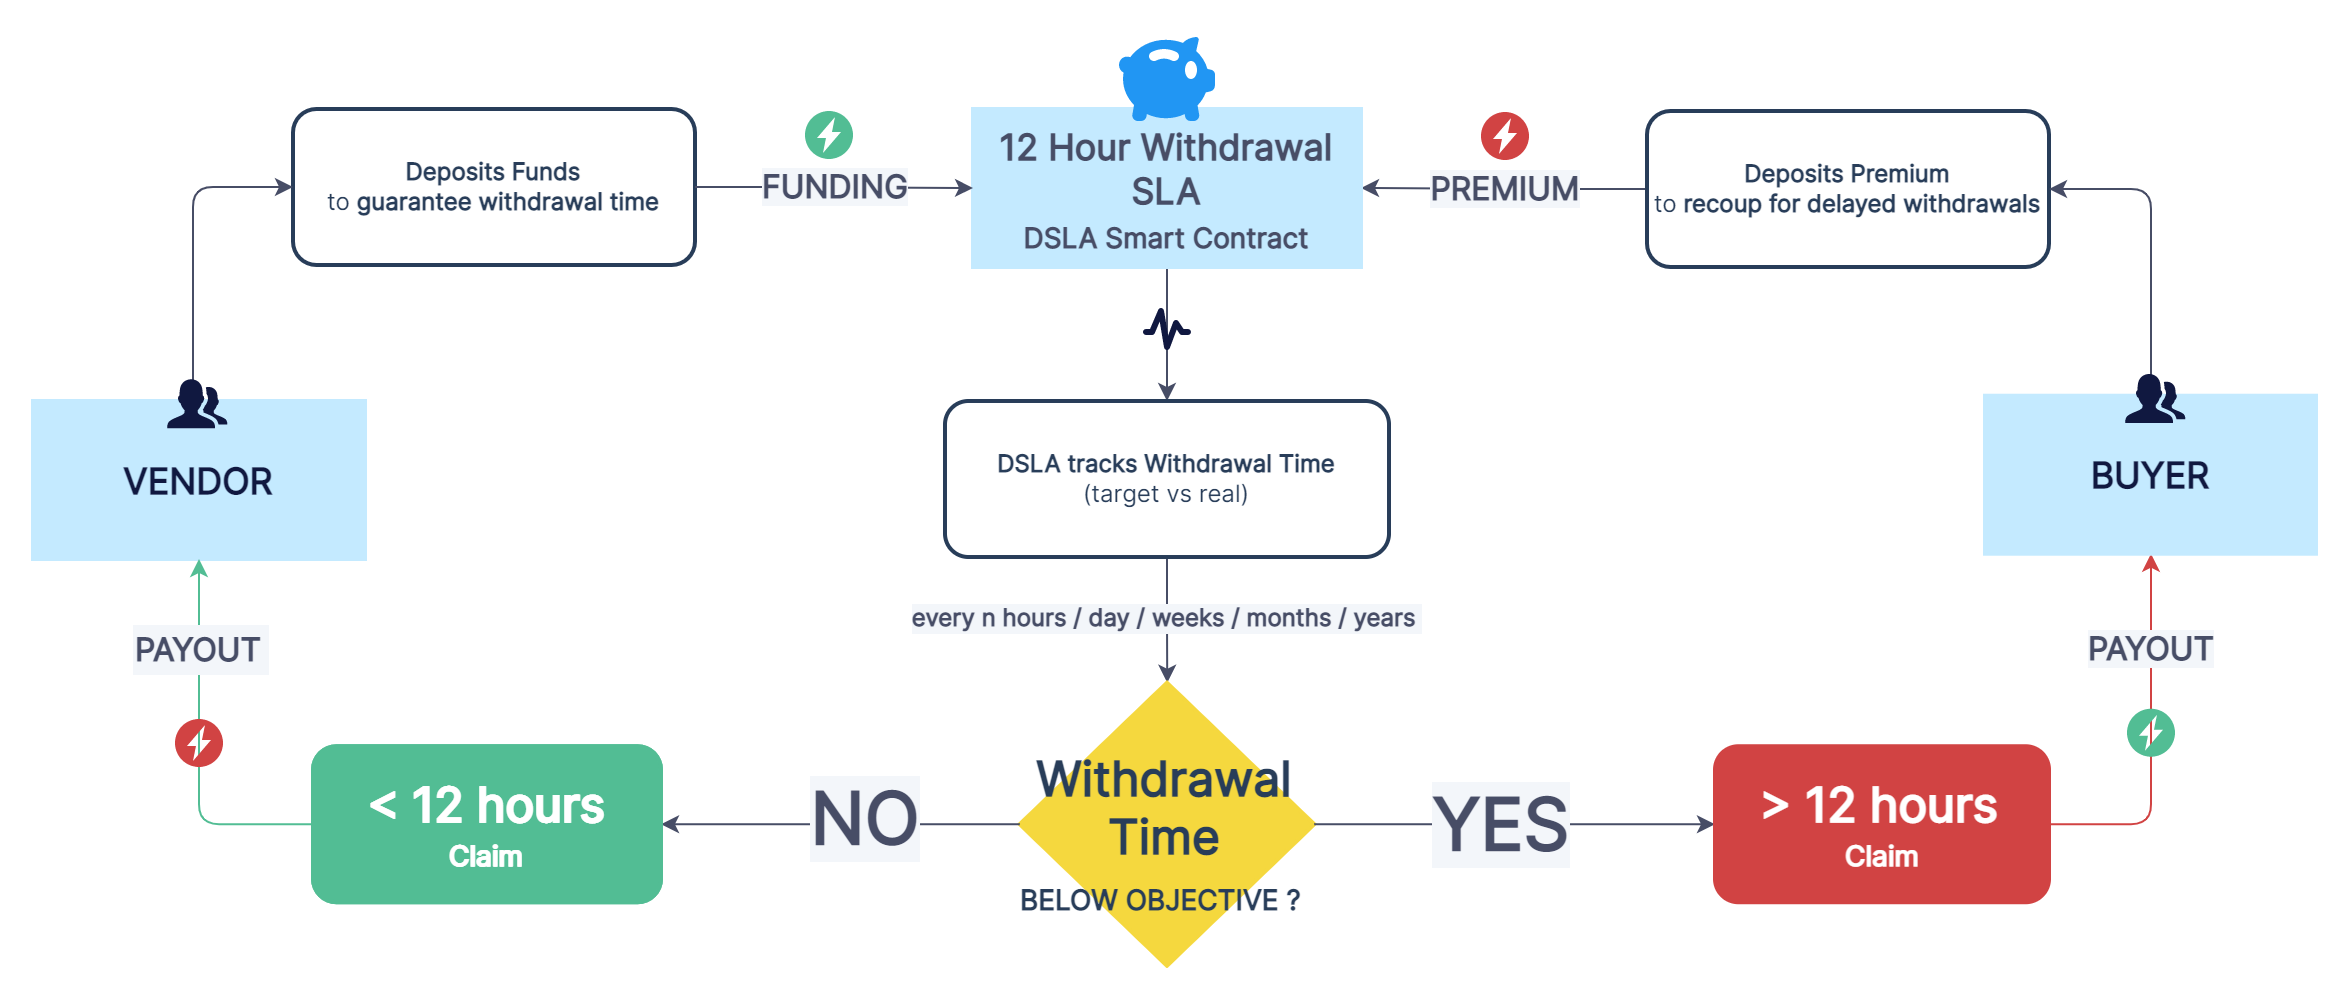 DSLA Withdrawal Time SLA